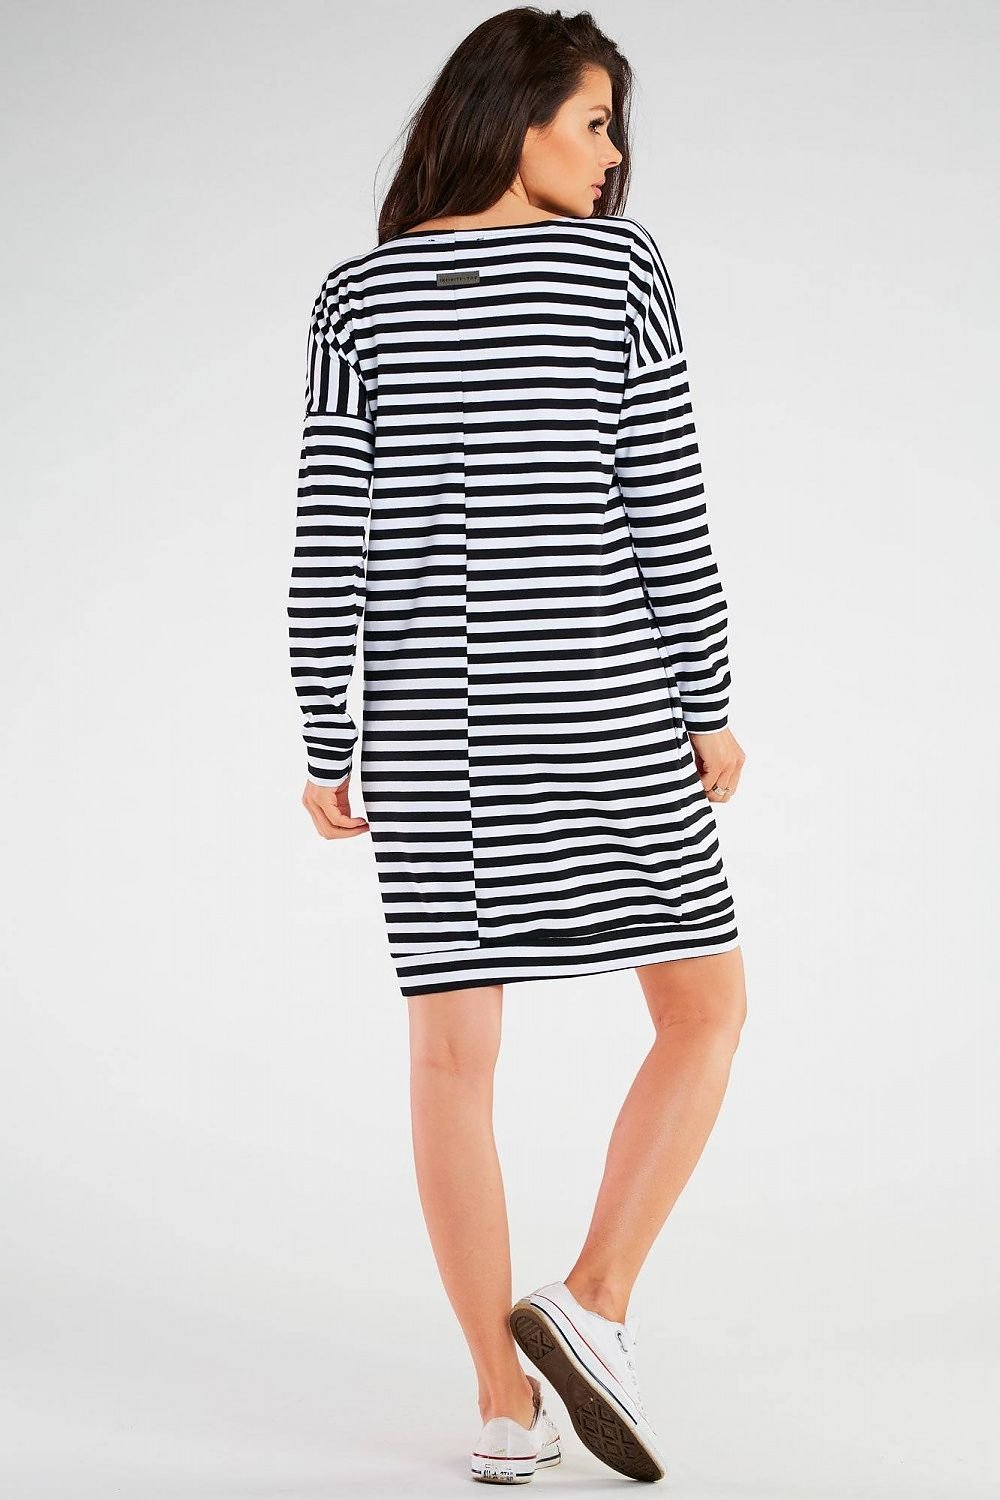 TEEK - Black White Striped One-Shoulder Daydress DRESS TEEK MH   